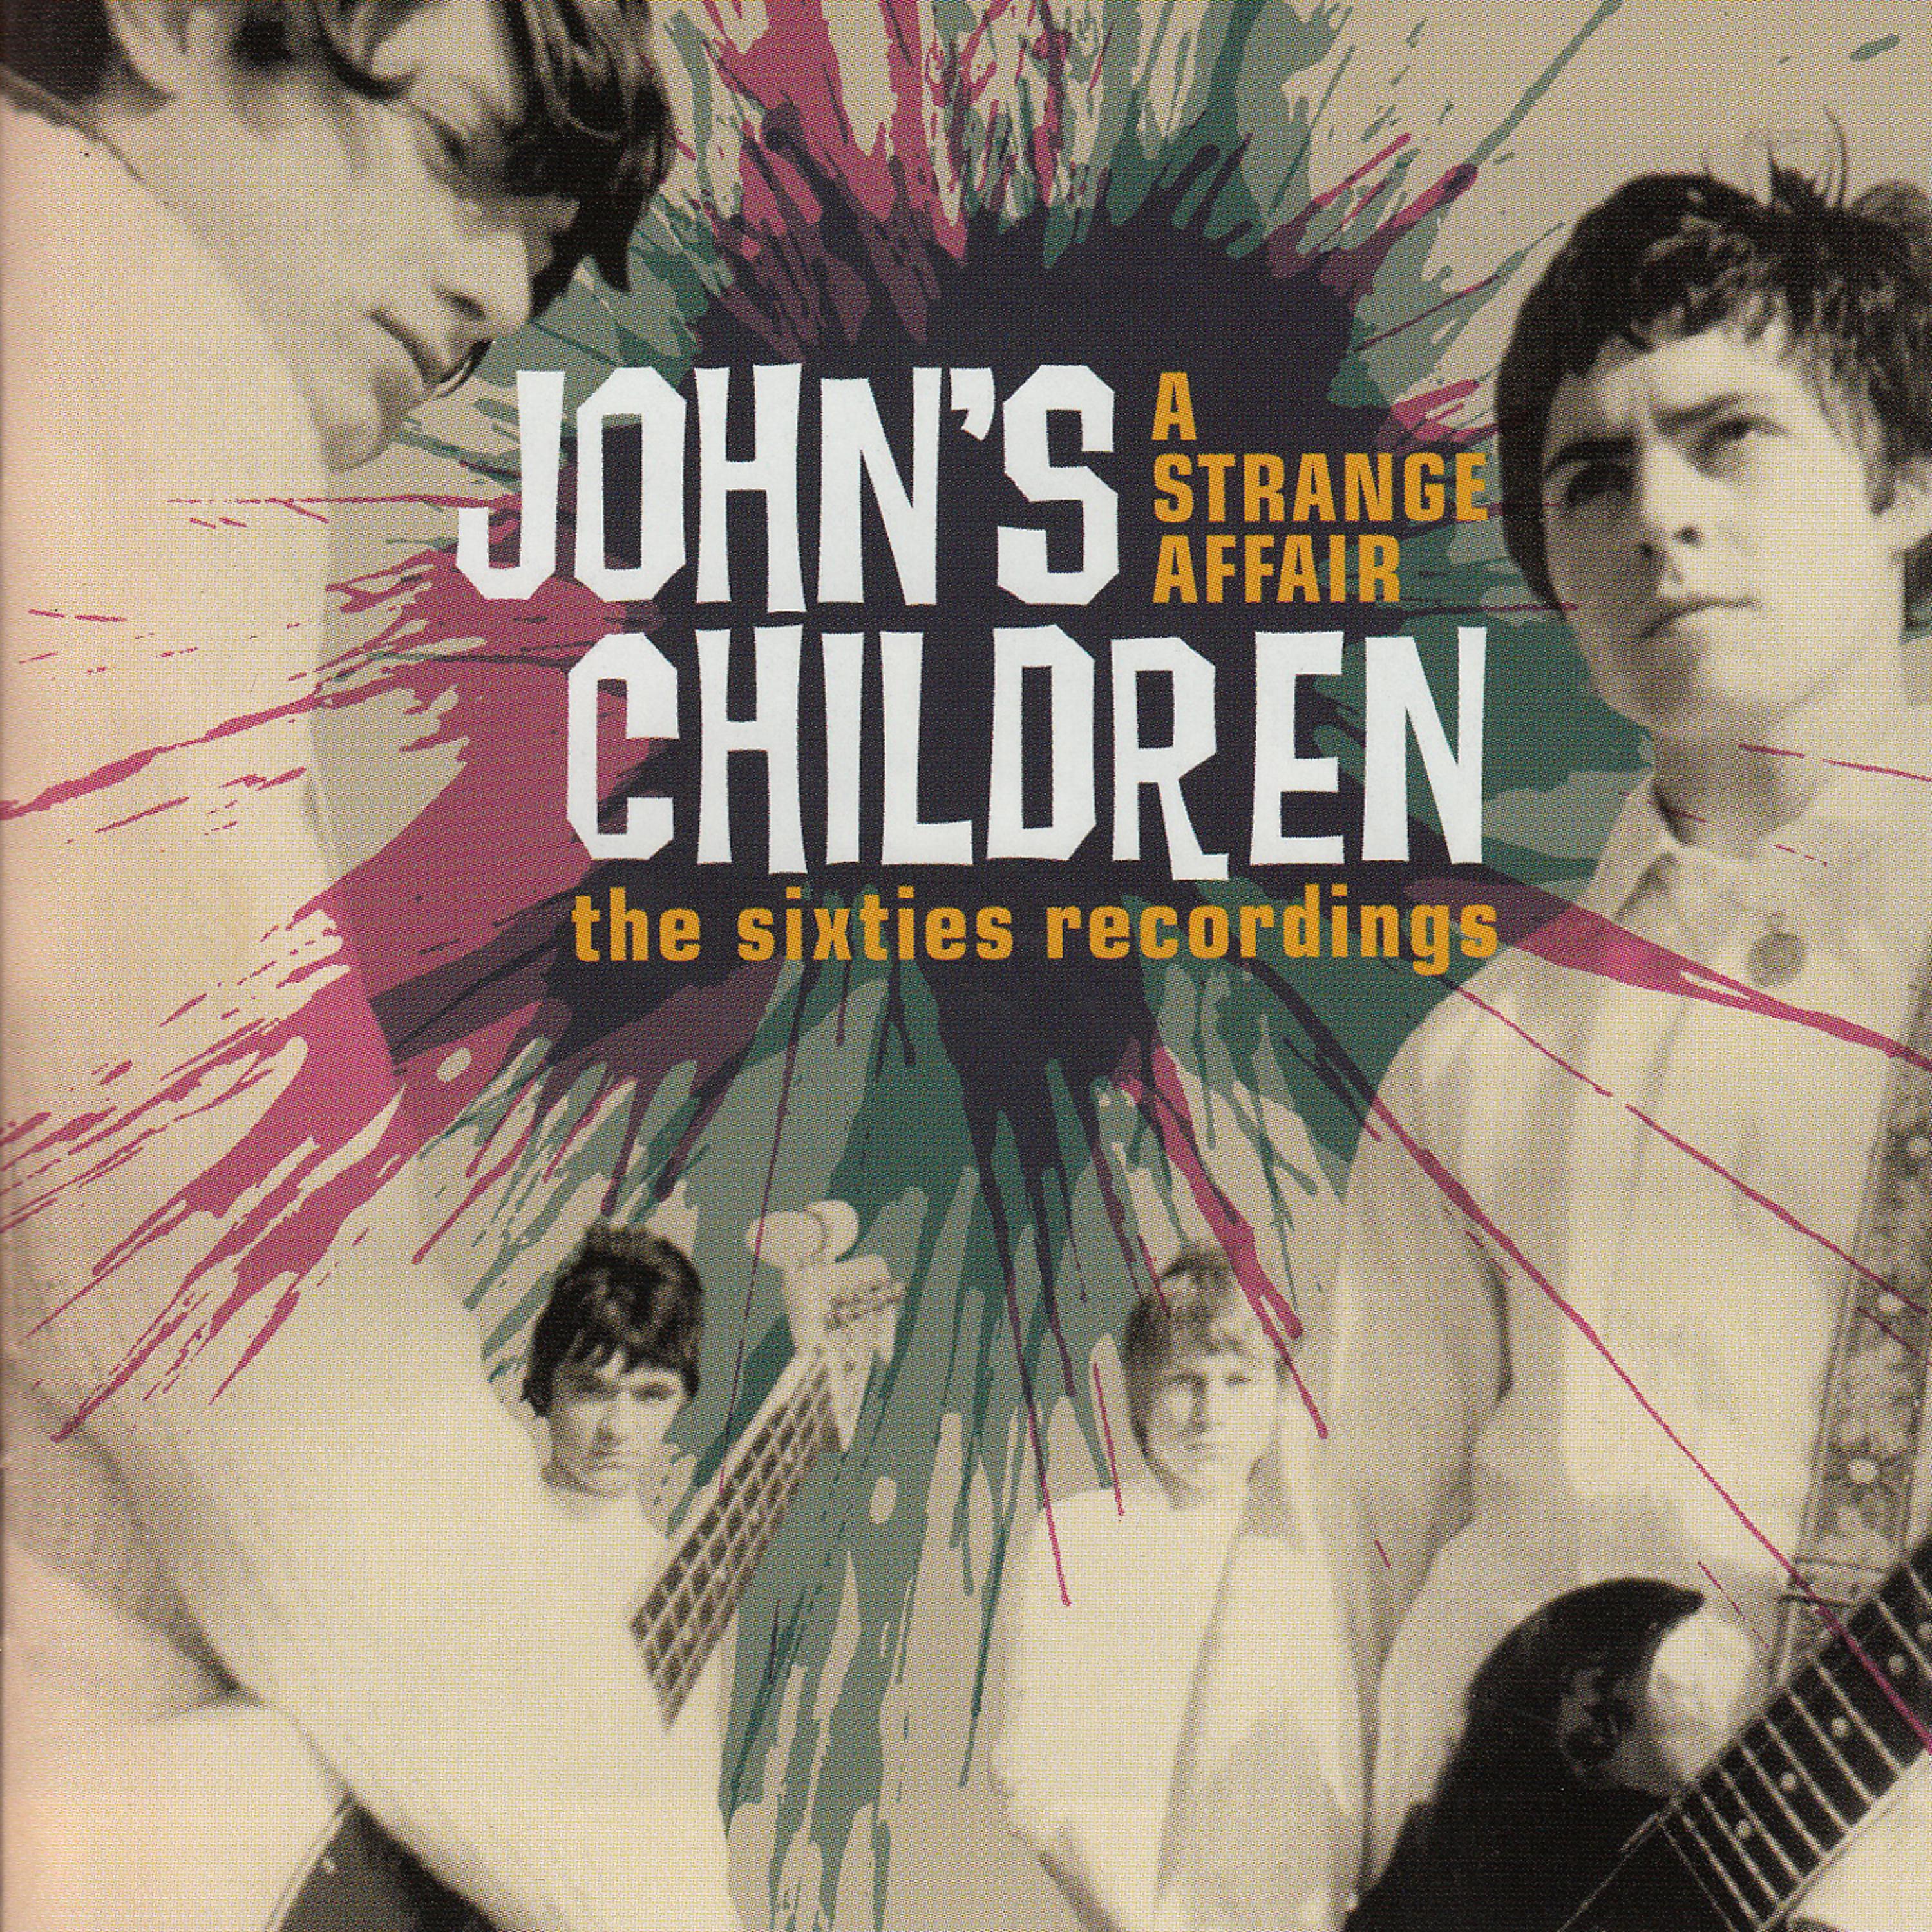 Strange children. My Strange Affair перевод. Squared - Strange Affairs (2022). Smashed blocked! (Marc Bolan & John's children).